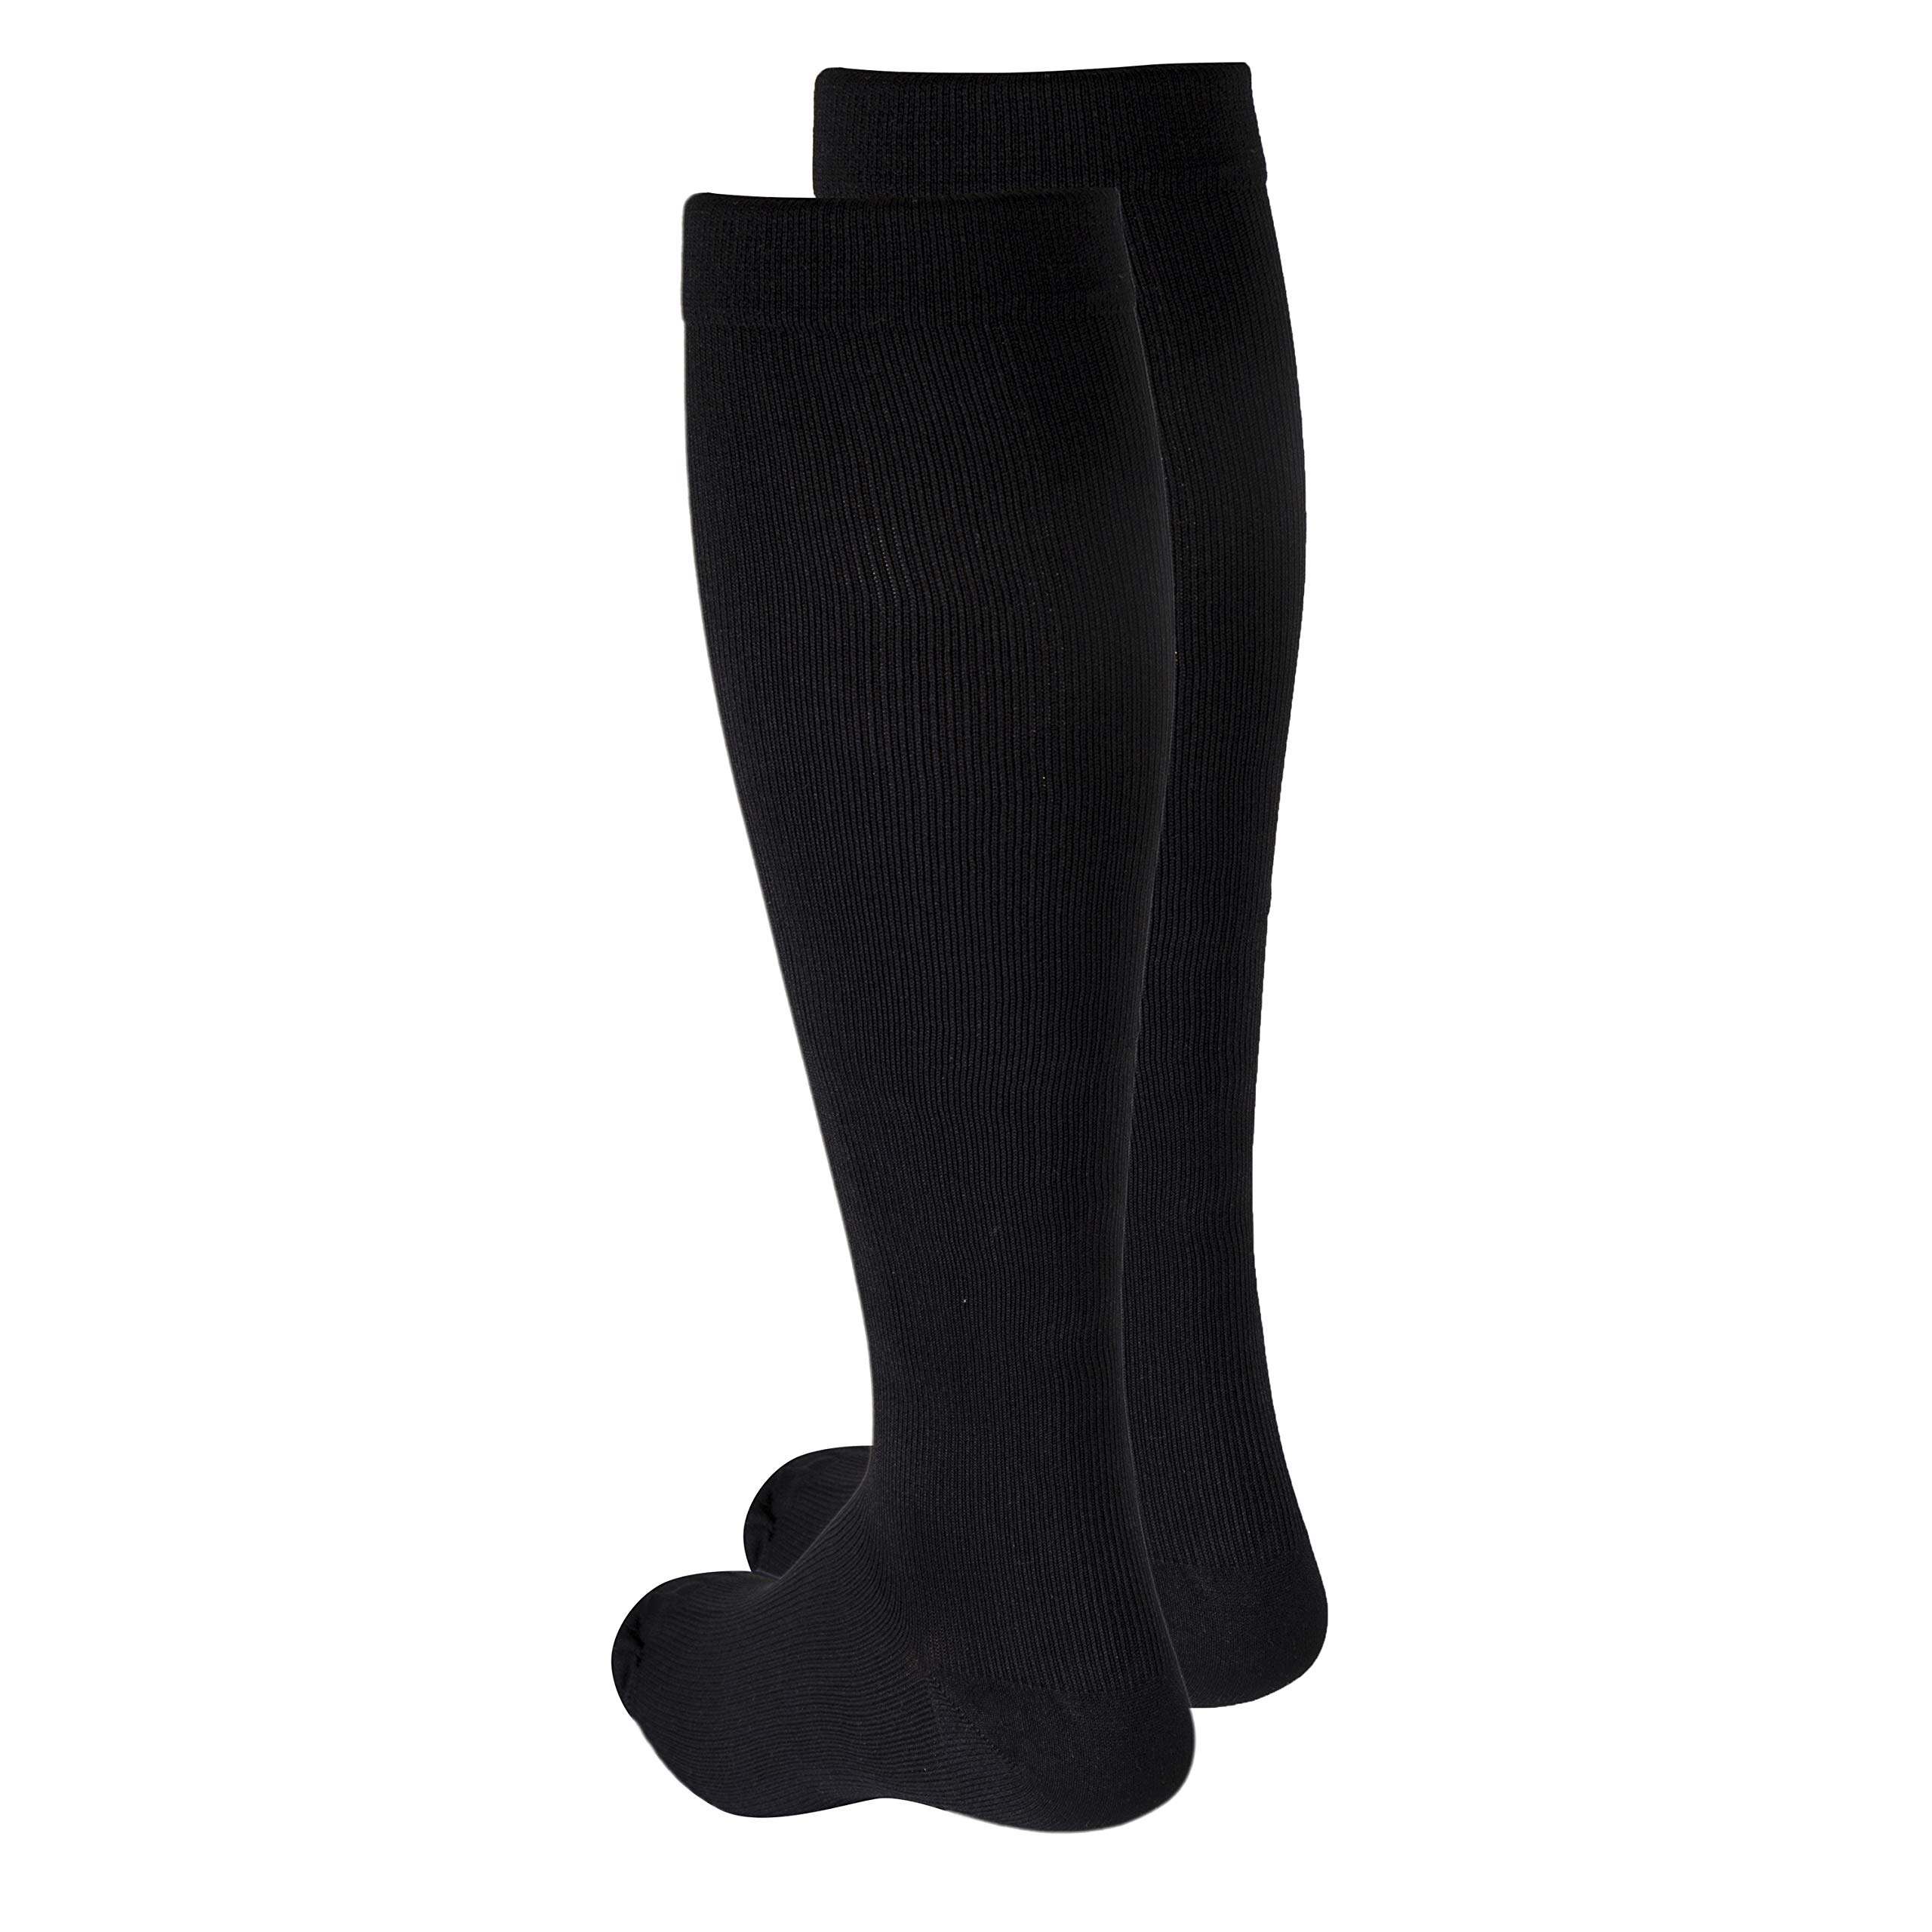 Truform Compression Socks, 15-20 mmHg, Men's Dress Socks, Knee High Over Calf Length